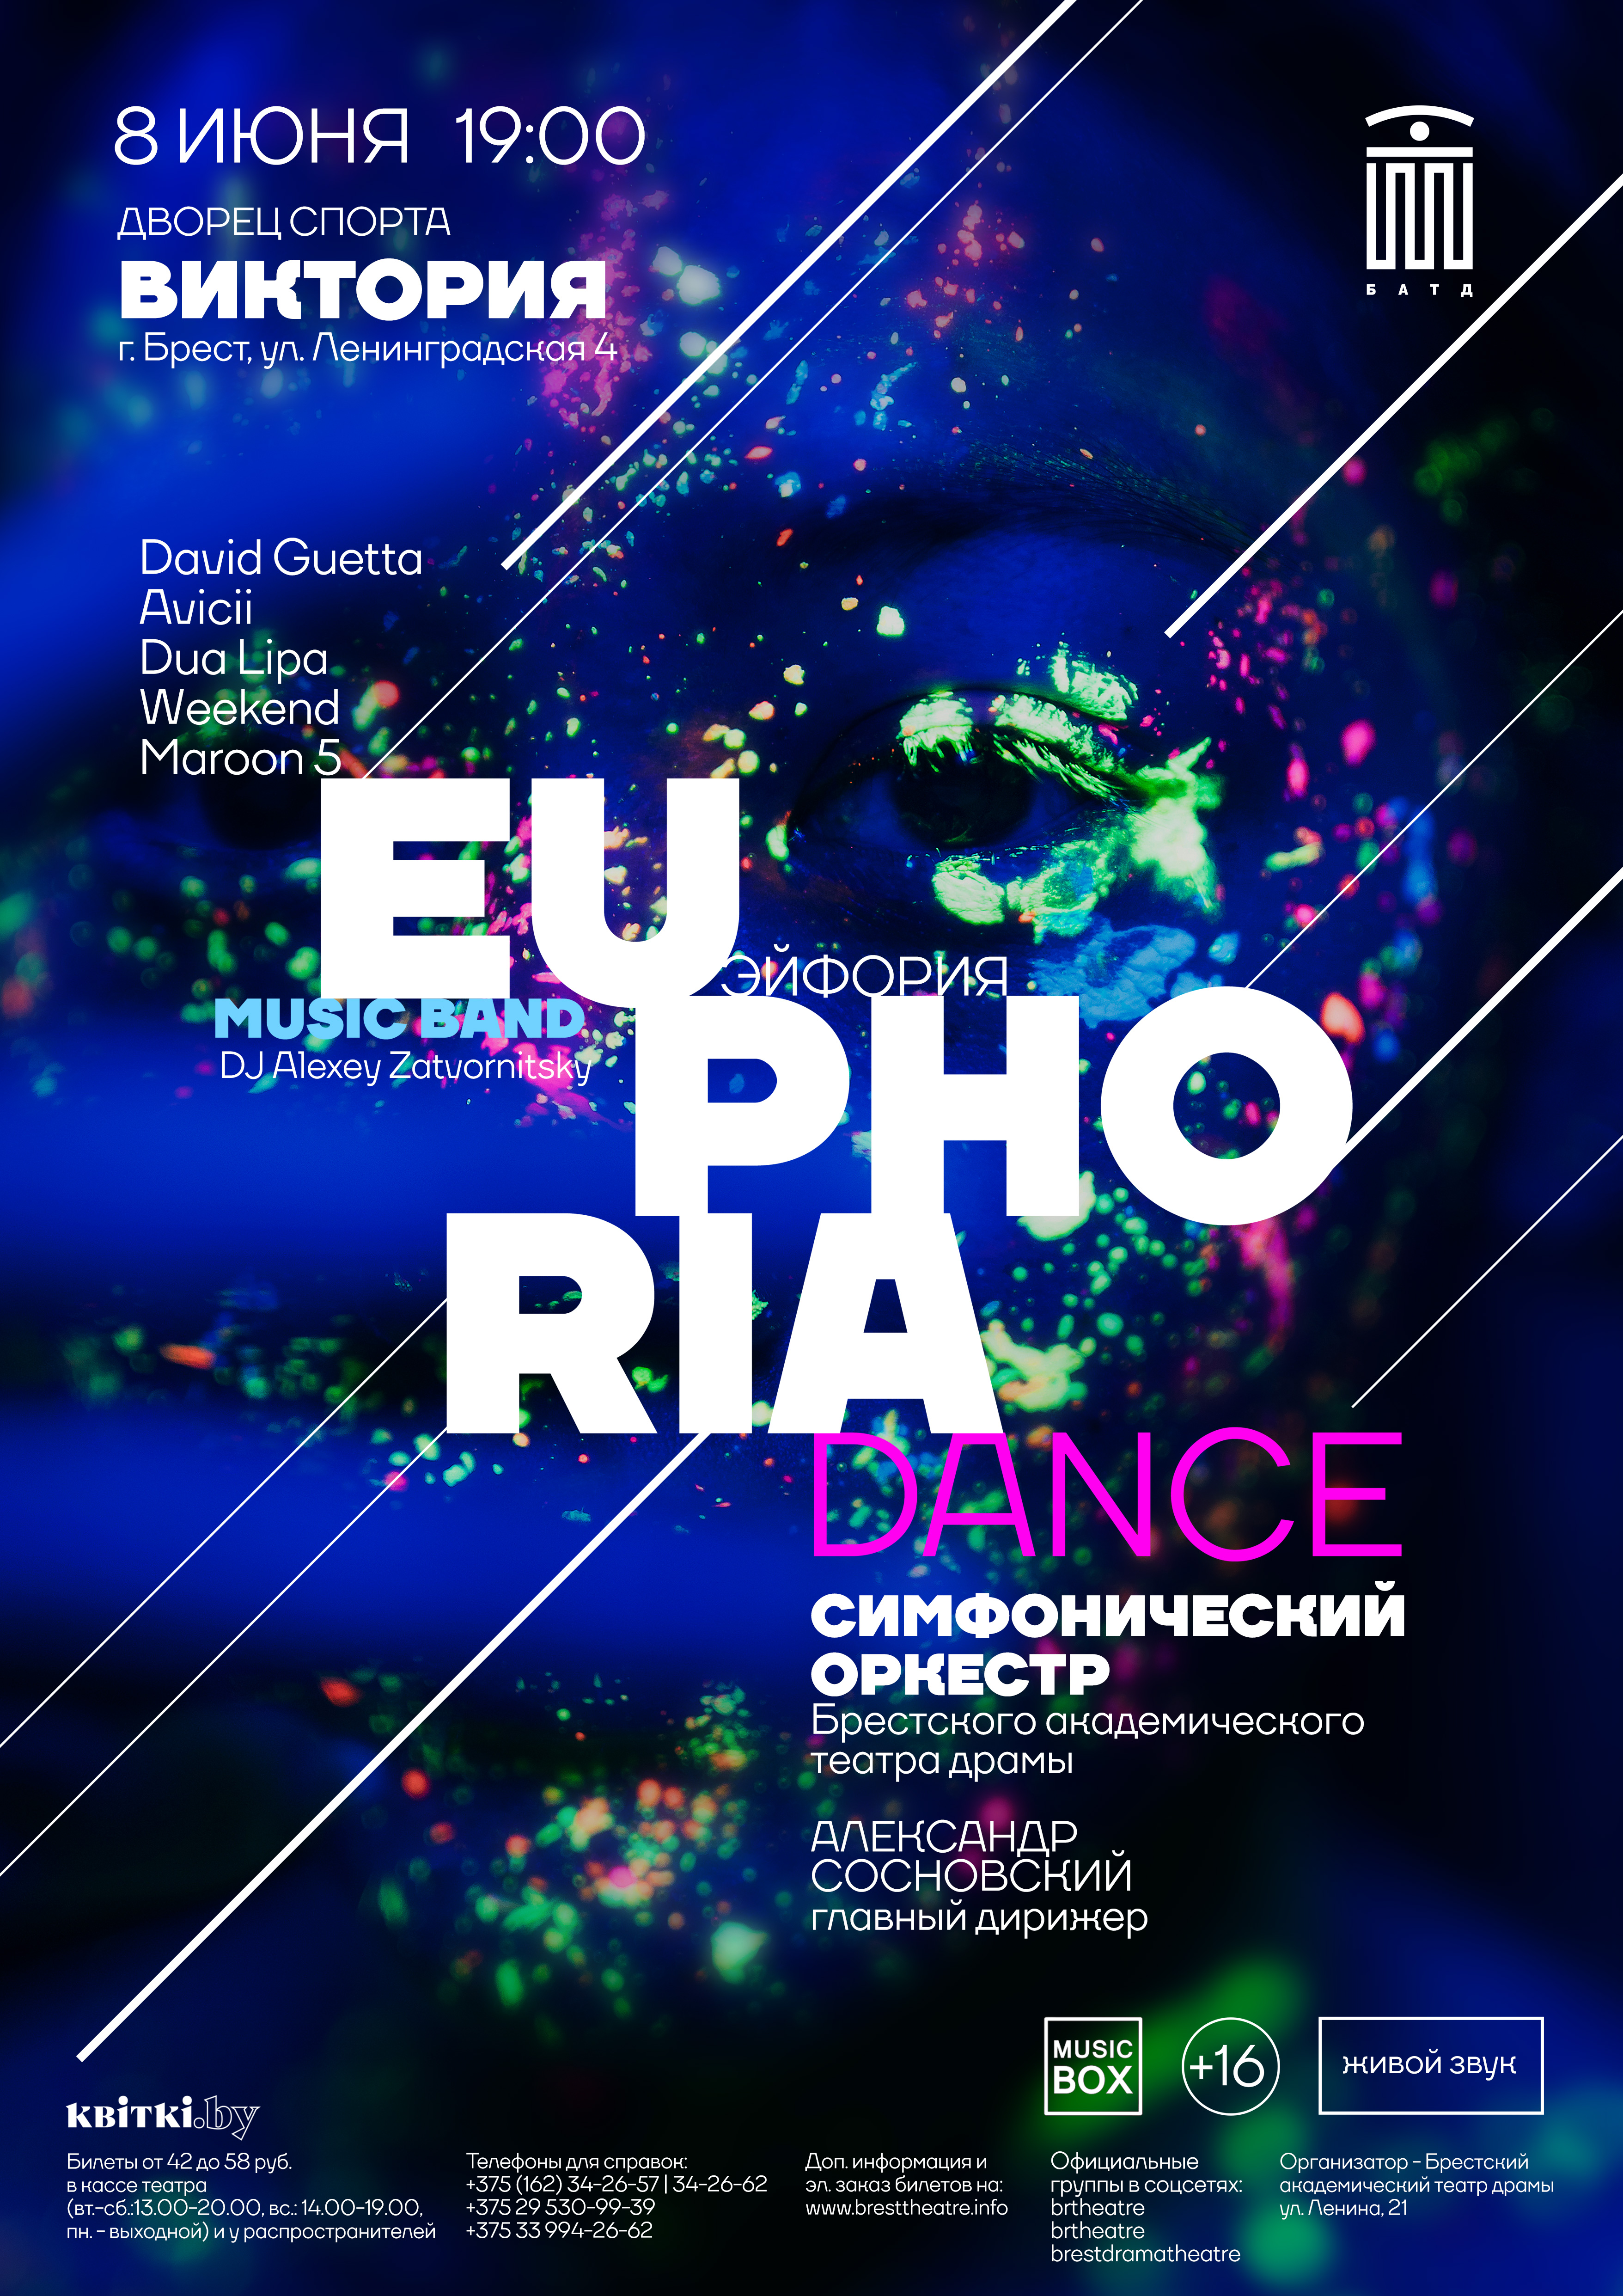 EUPHORIA - DANCE 16+